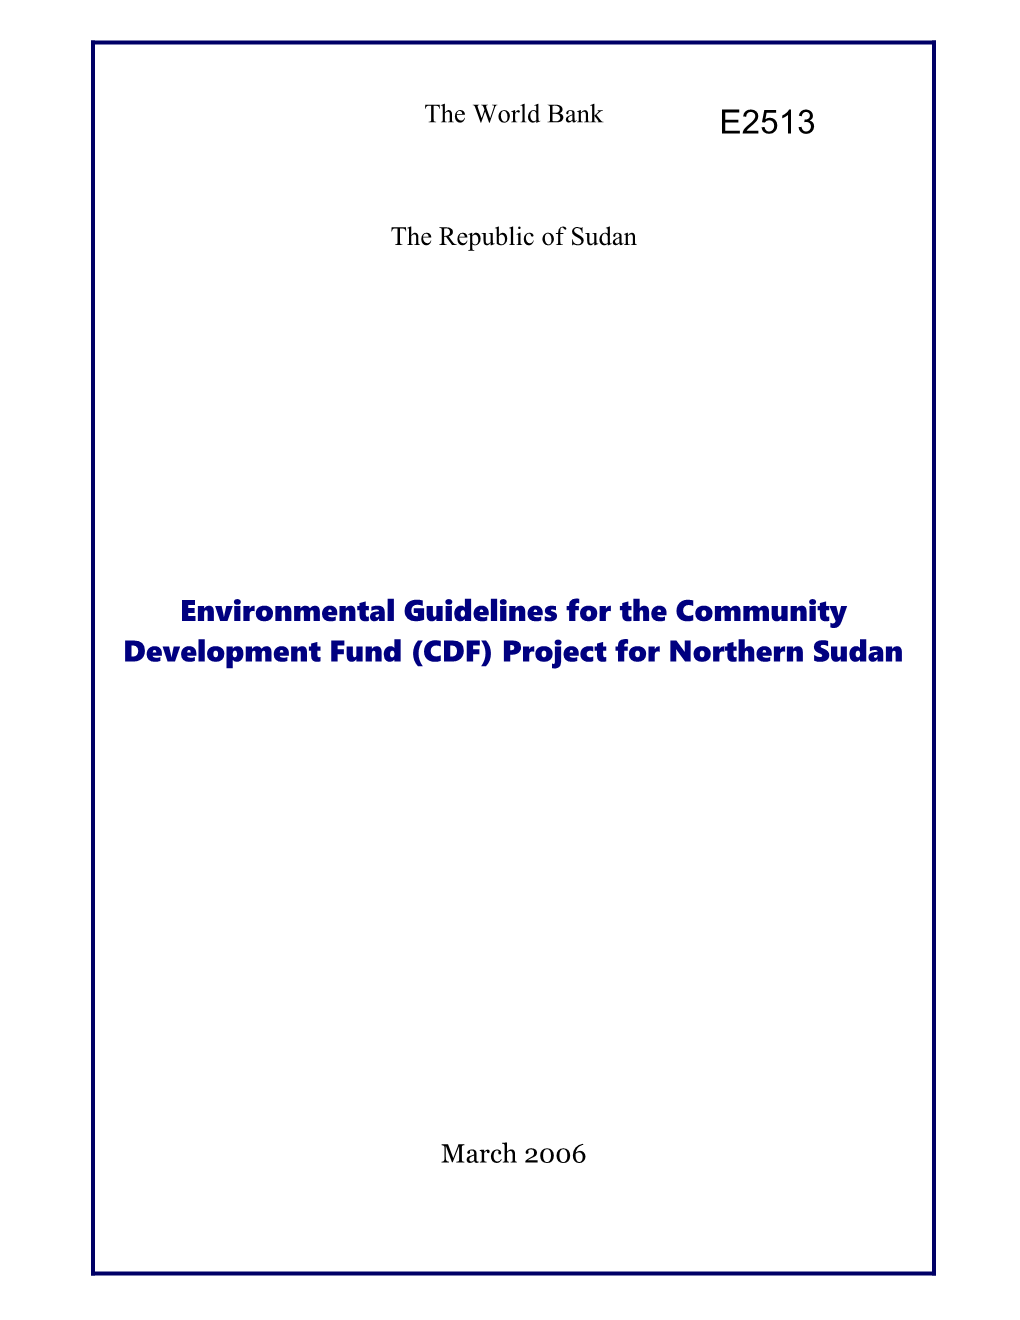 Community Development Fund Project(CDF) Sudan